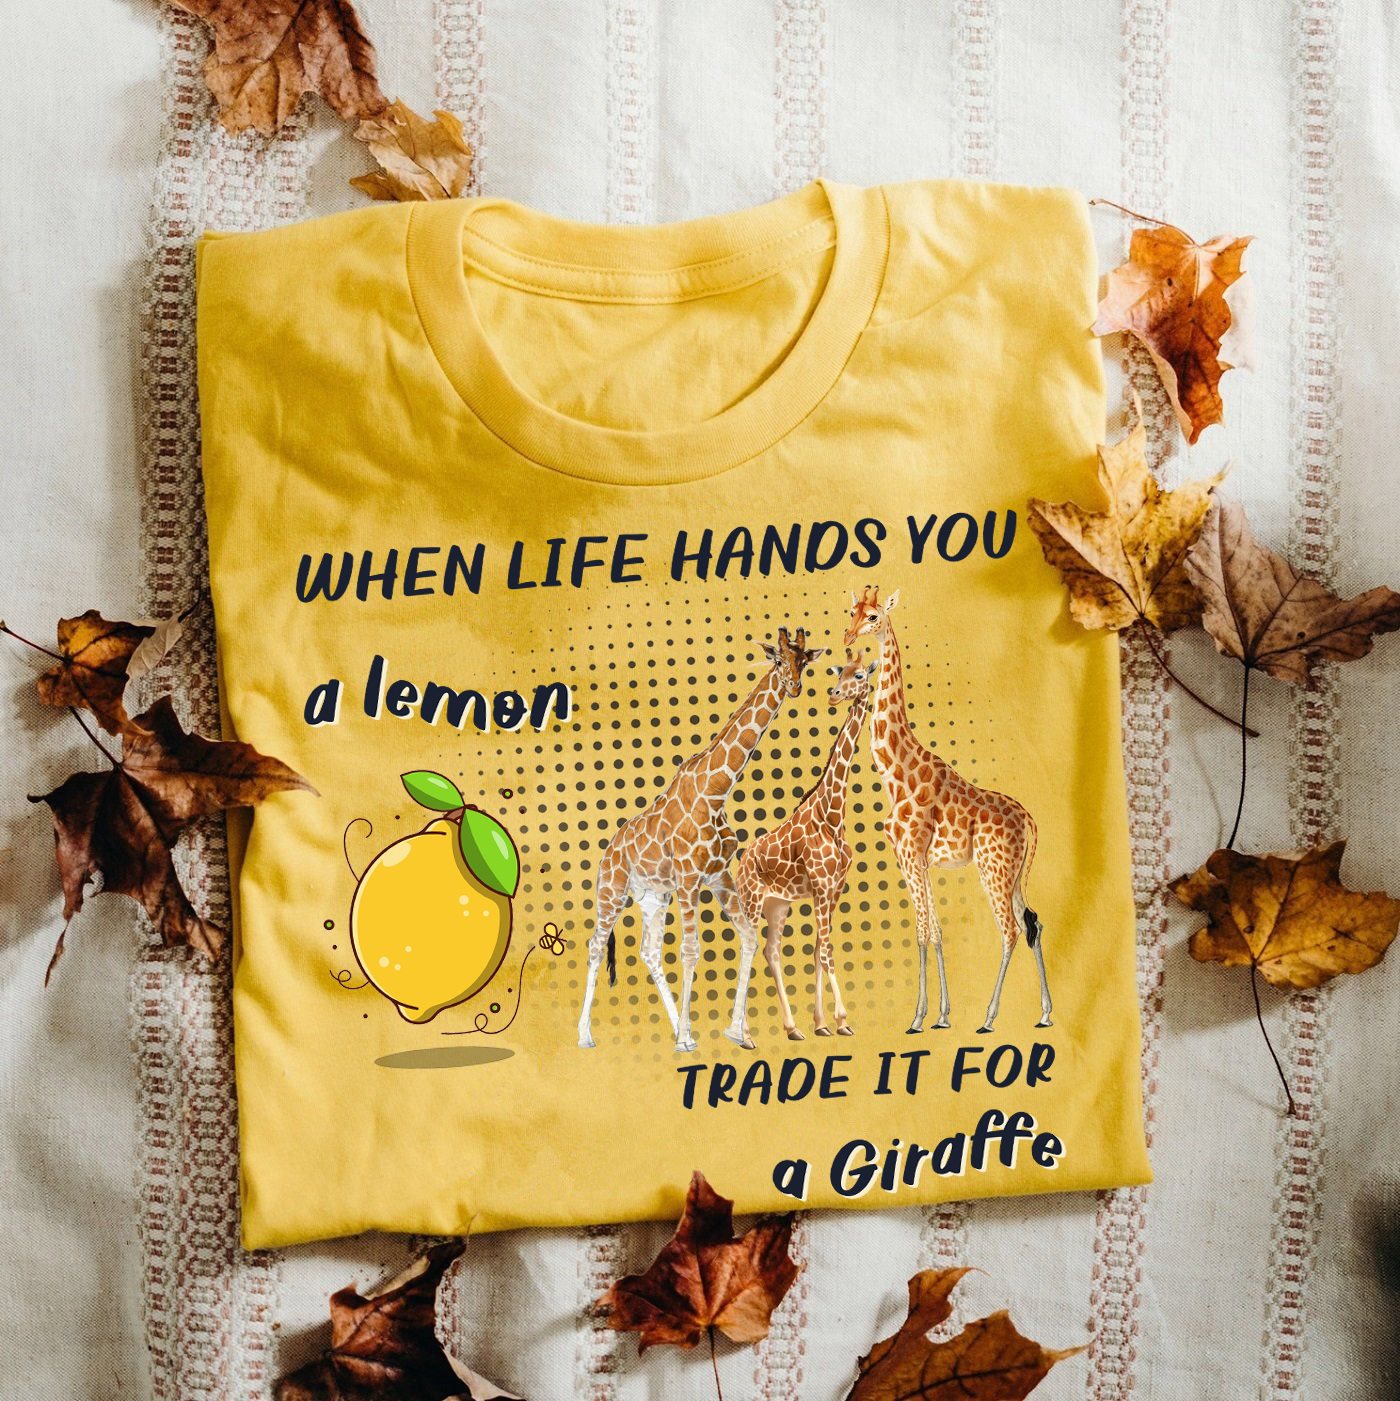 When life hands you a lemon trade it for a giraffe